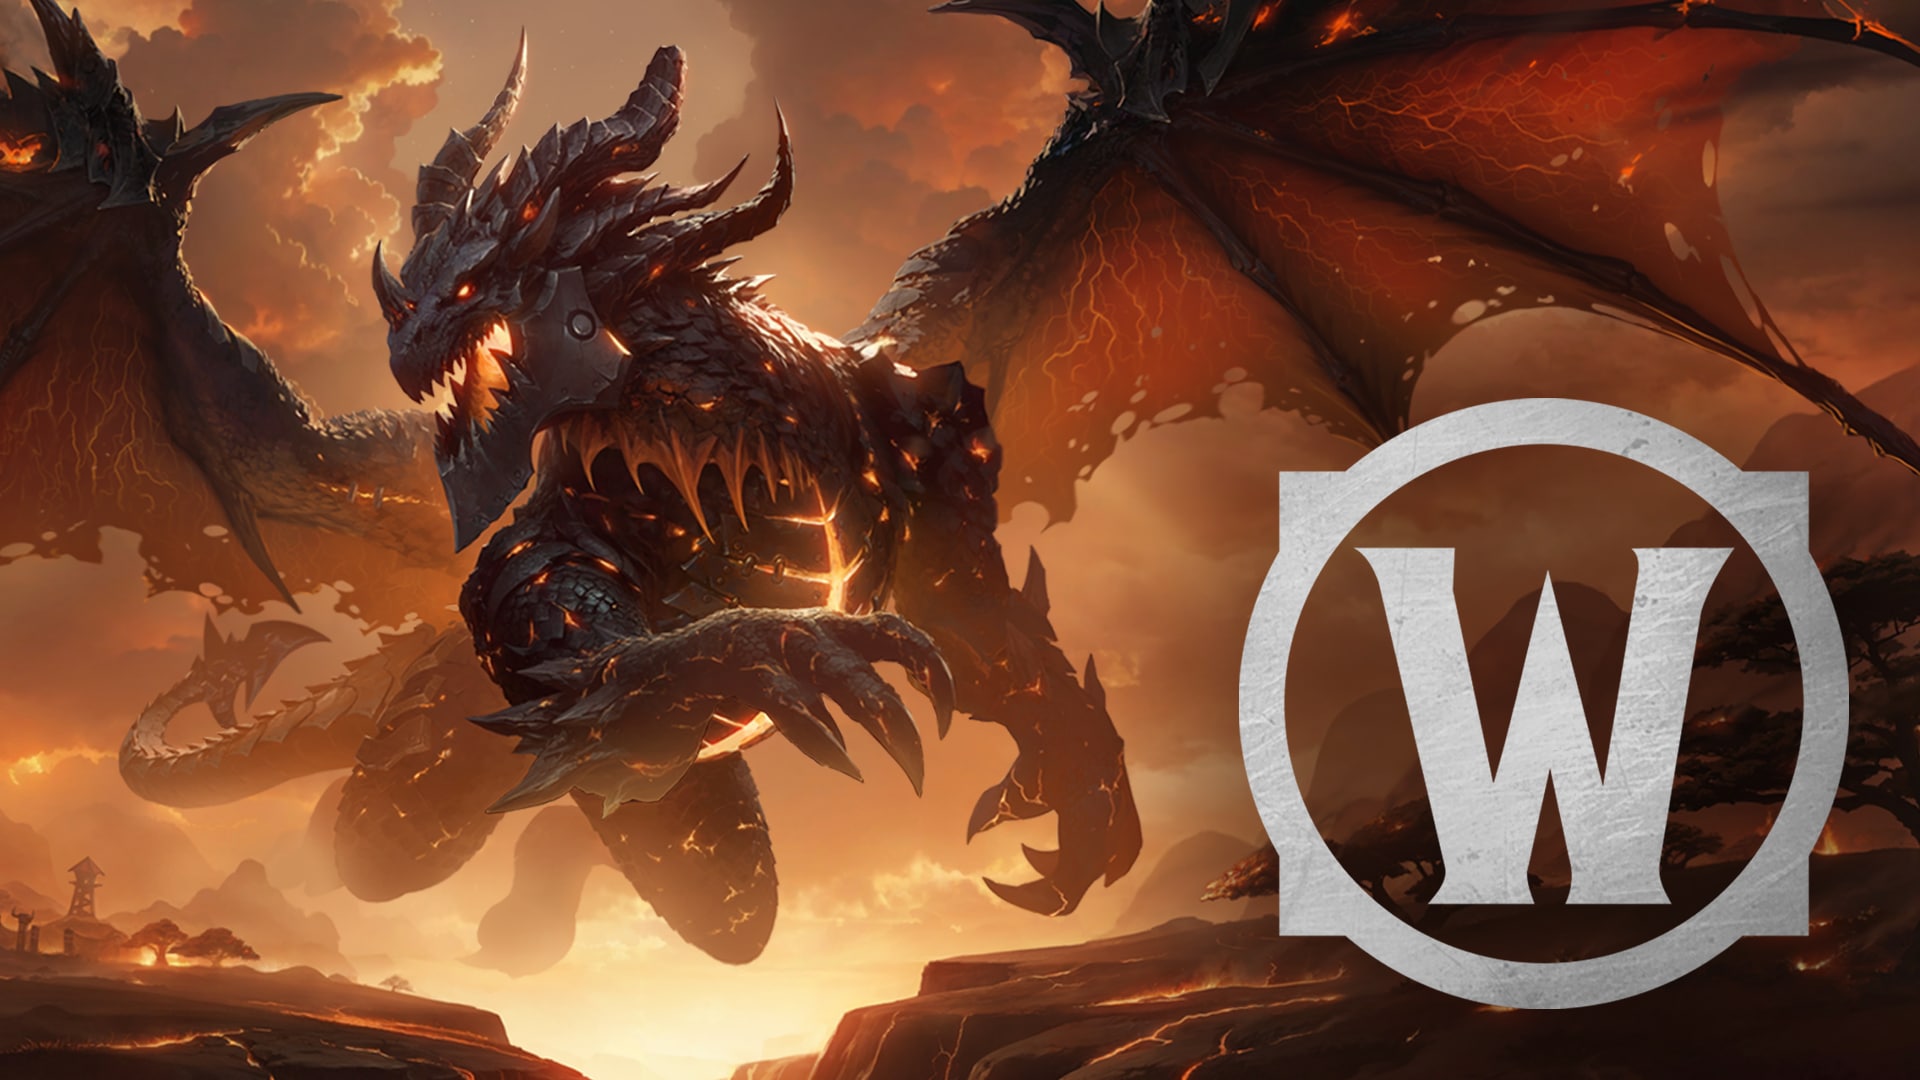 Battle.net desktop app - Wowpedia - Your wiki guide to the World of Warcraft